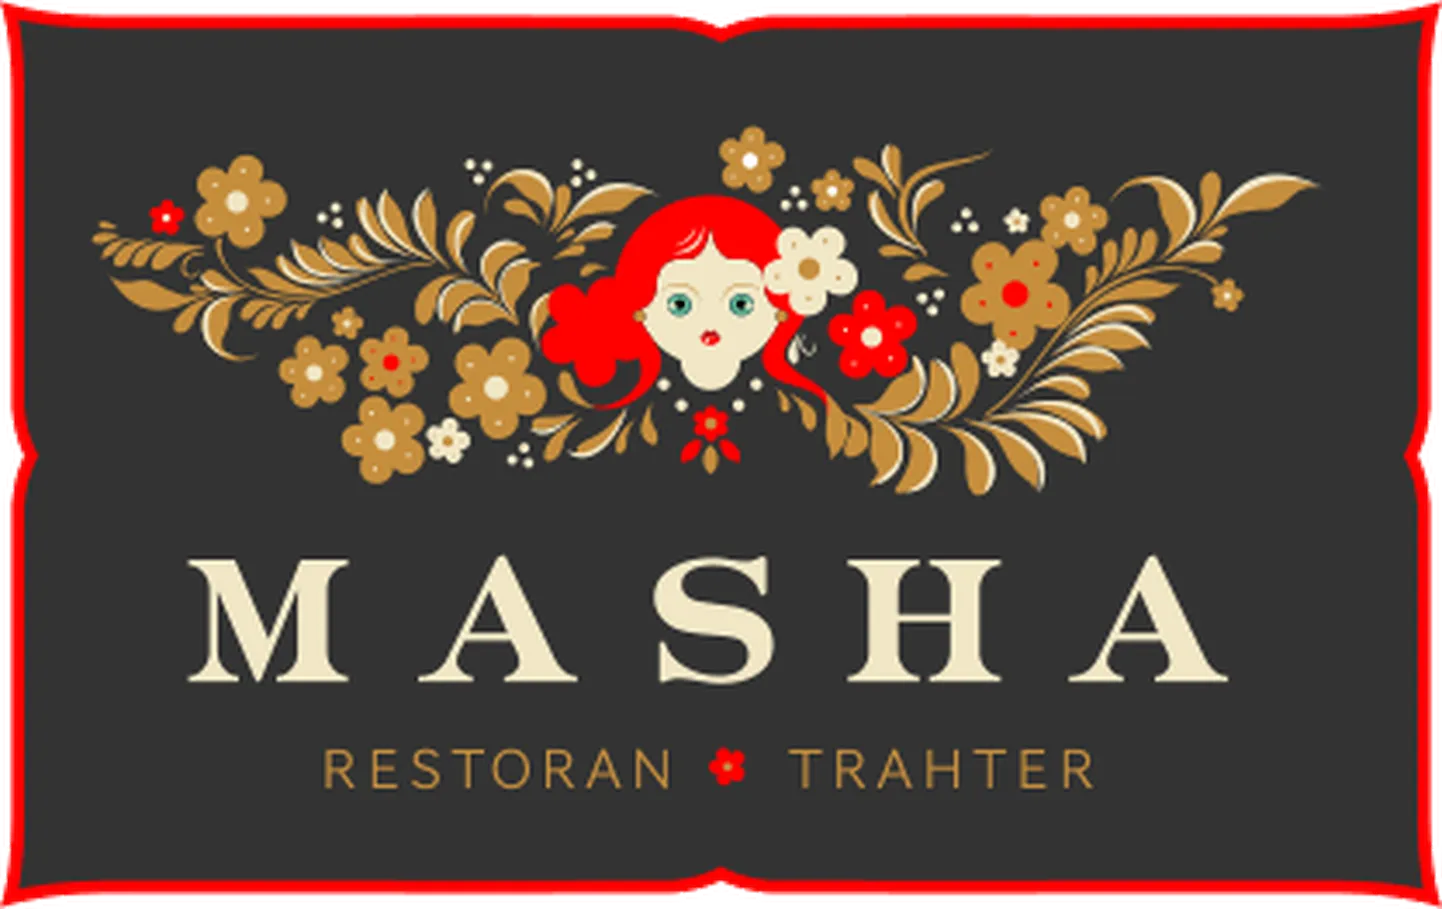 MASHA restoran & trahter